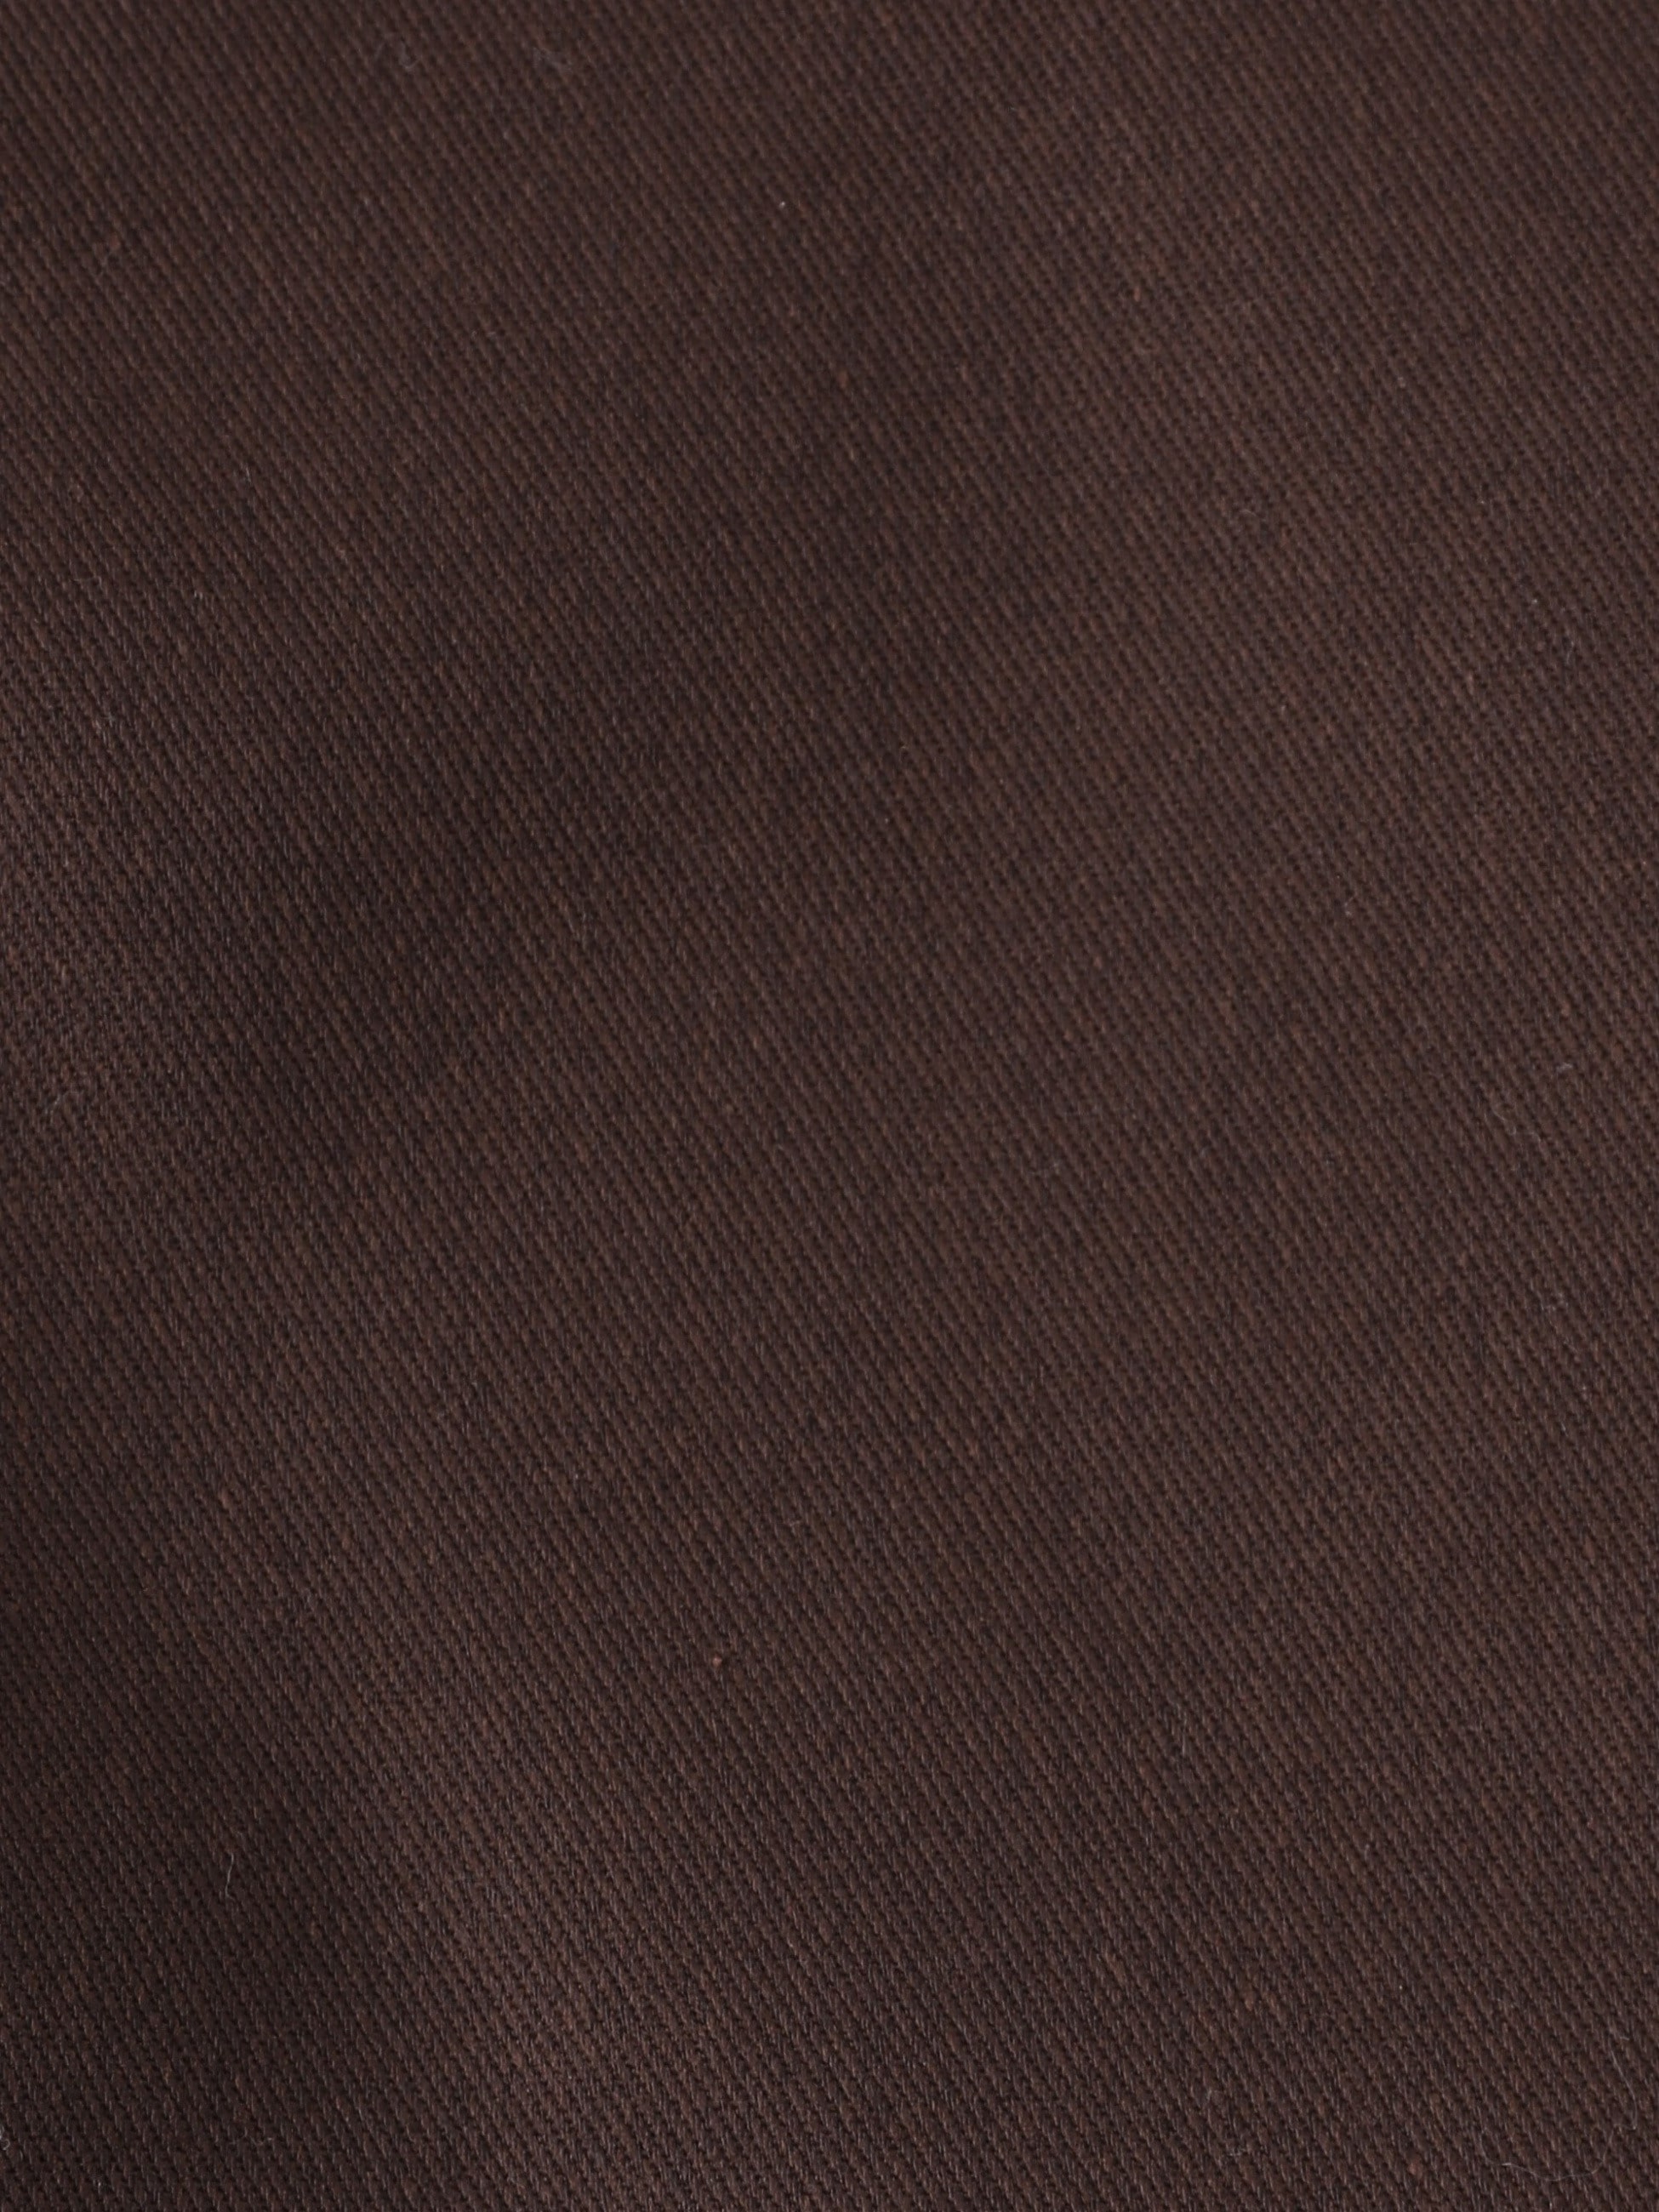 Flannel Lining Work Chino Pants 詳細画像 dark brown 4